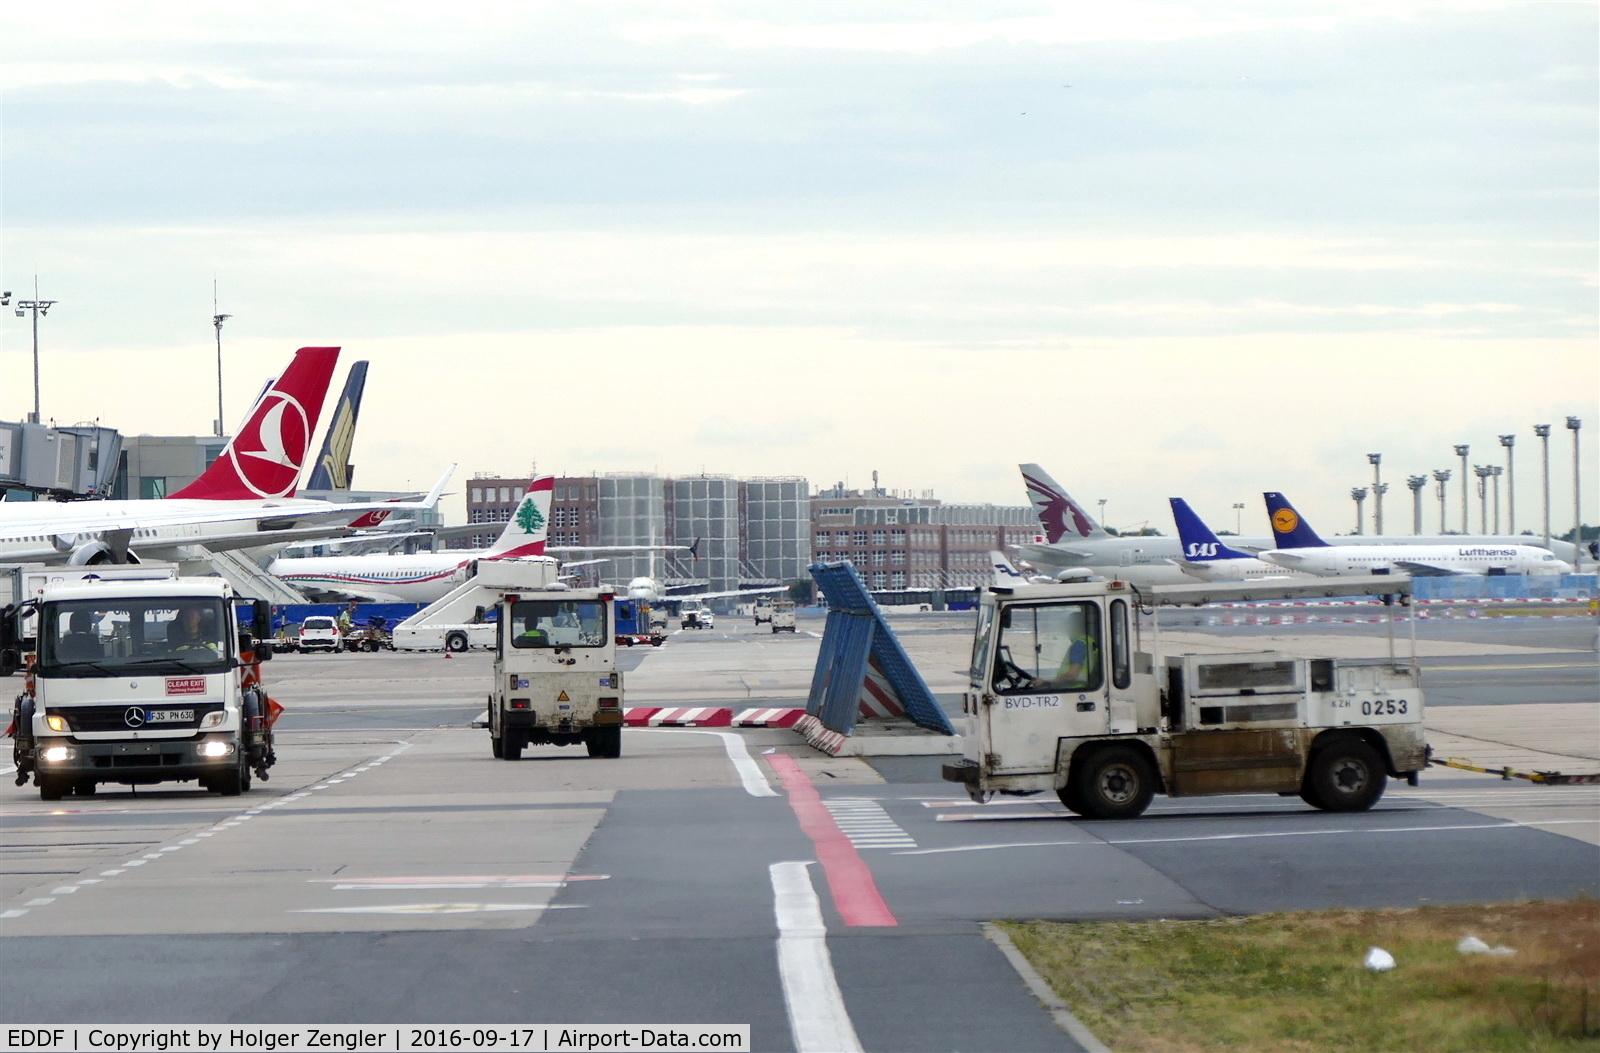 Frankfurt International Airport, Frankfurt am Main Germany (EDDF) - Business as usual at terminal 2....